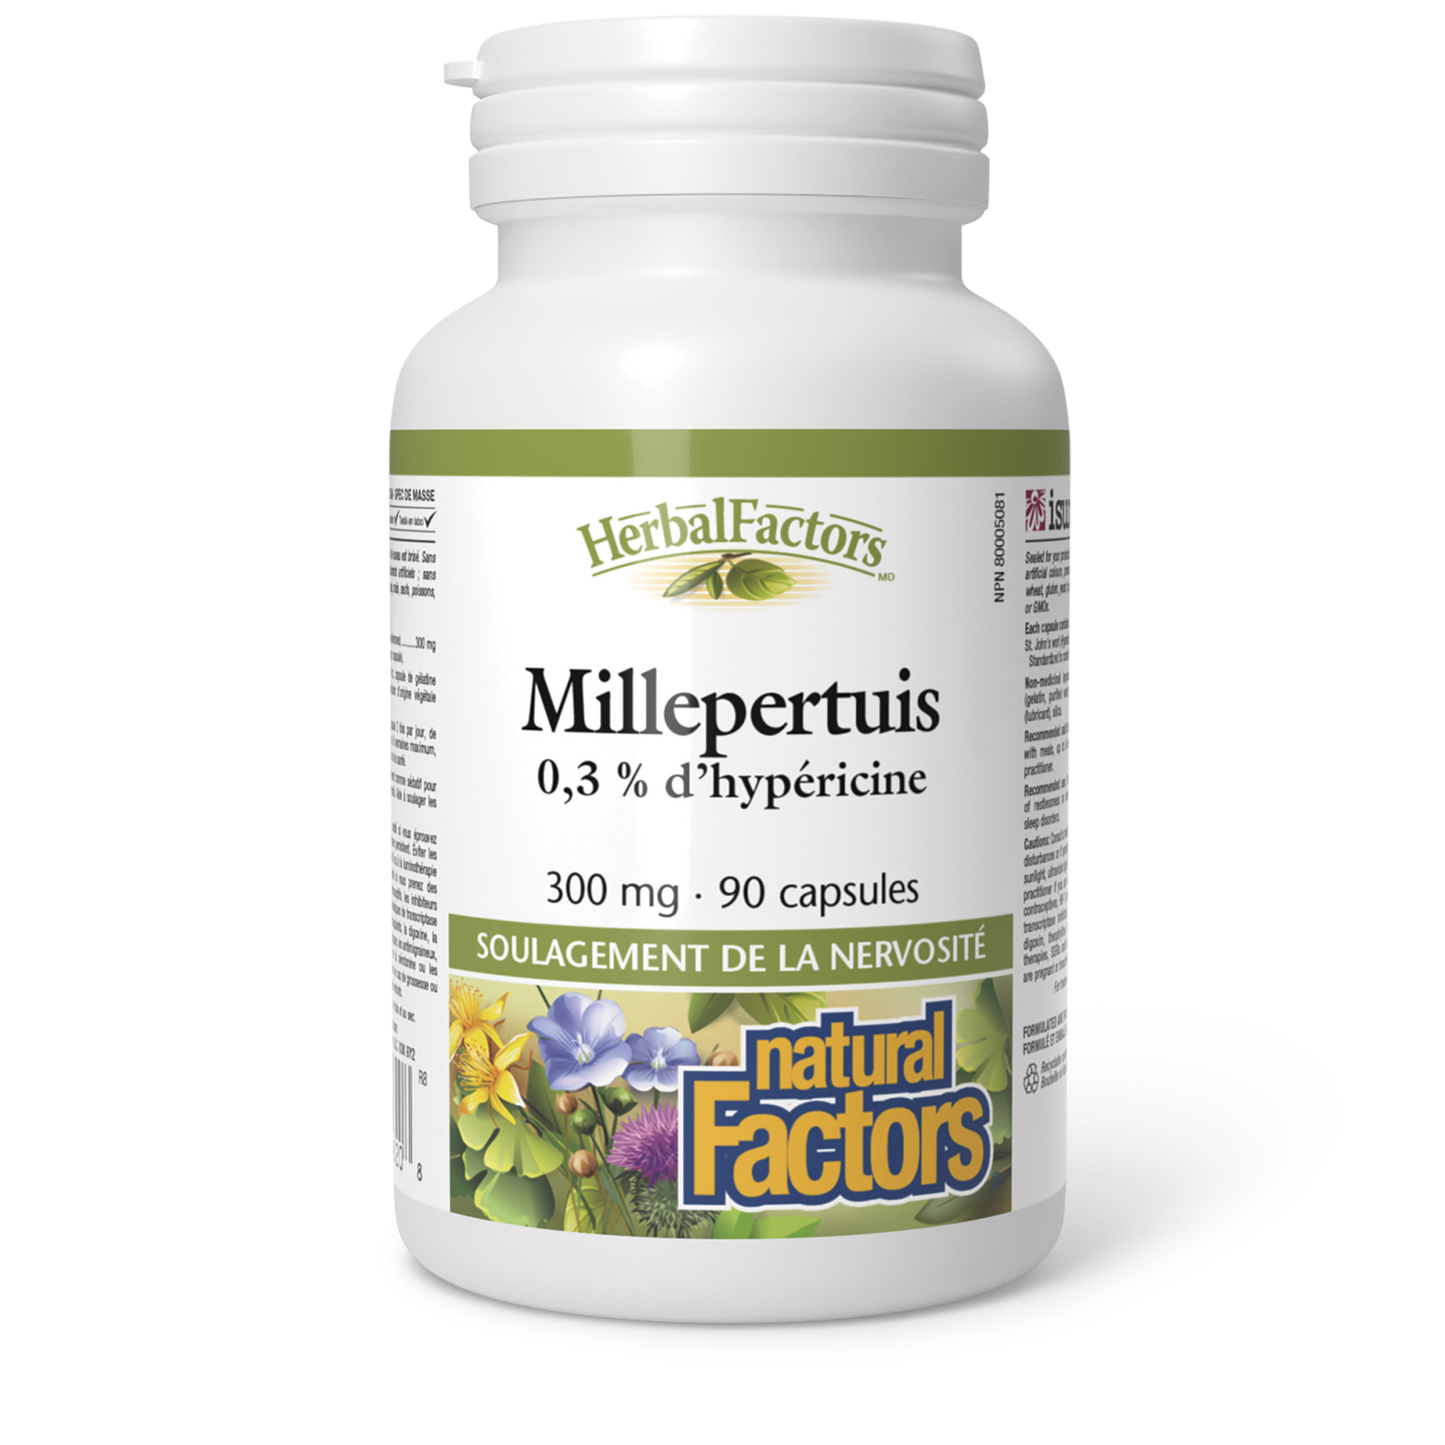 Millepertuis 300 mg, HerbalFactors, Natural Factors|v|image|4820